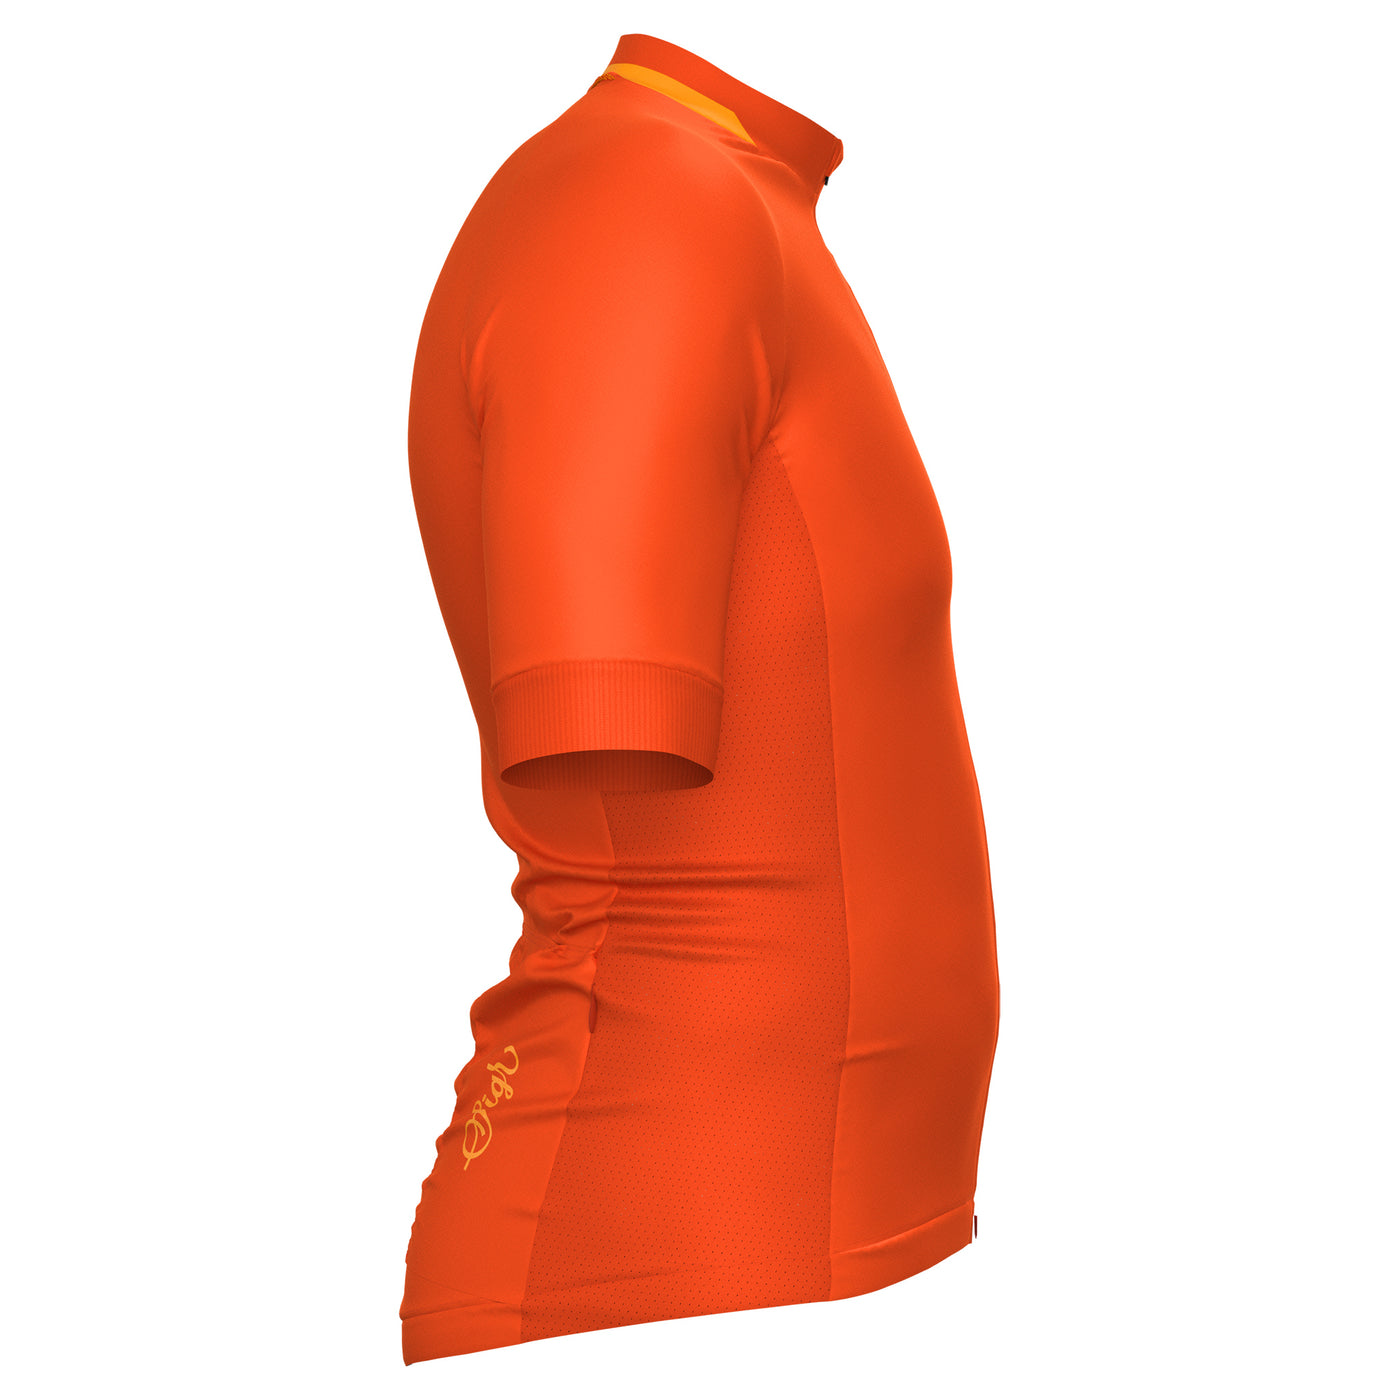 Sigr Havtorn Bright - Orange Cycling Jersey for Men